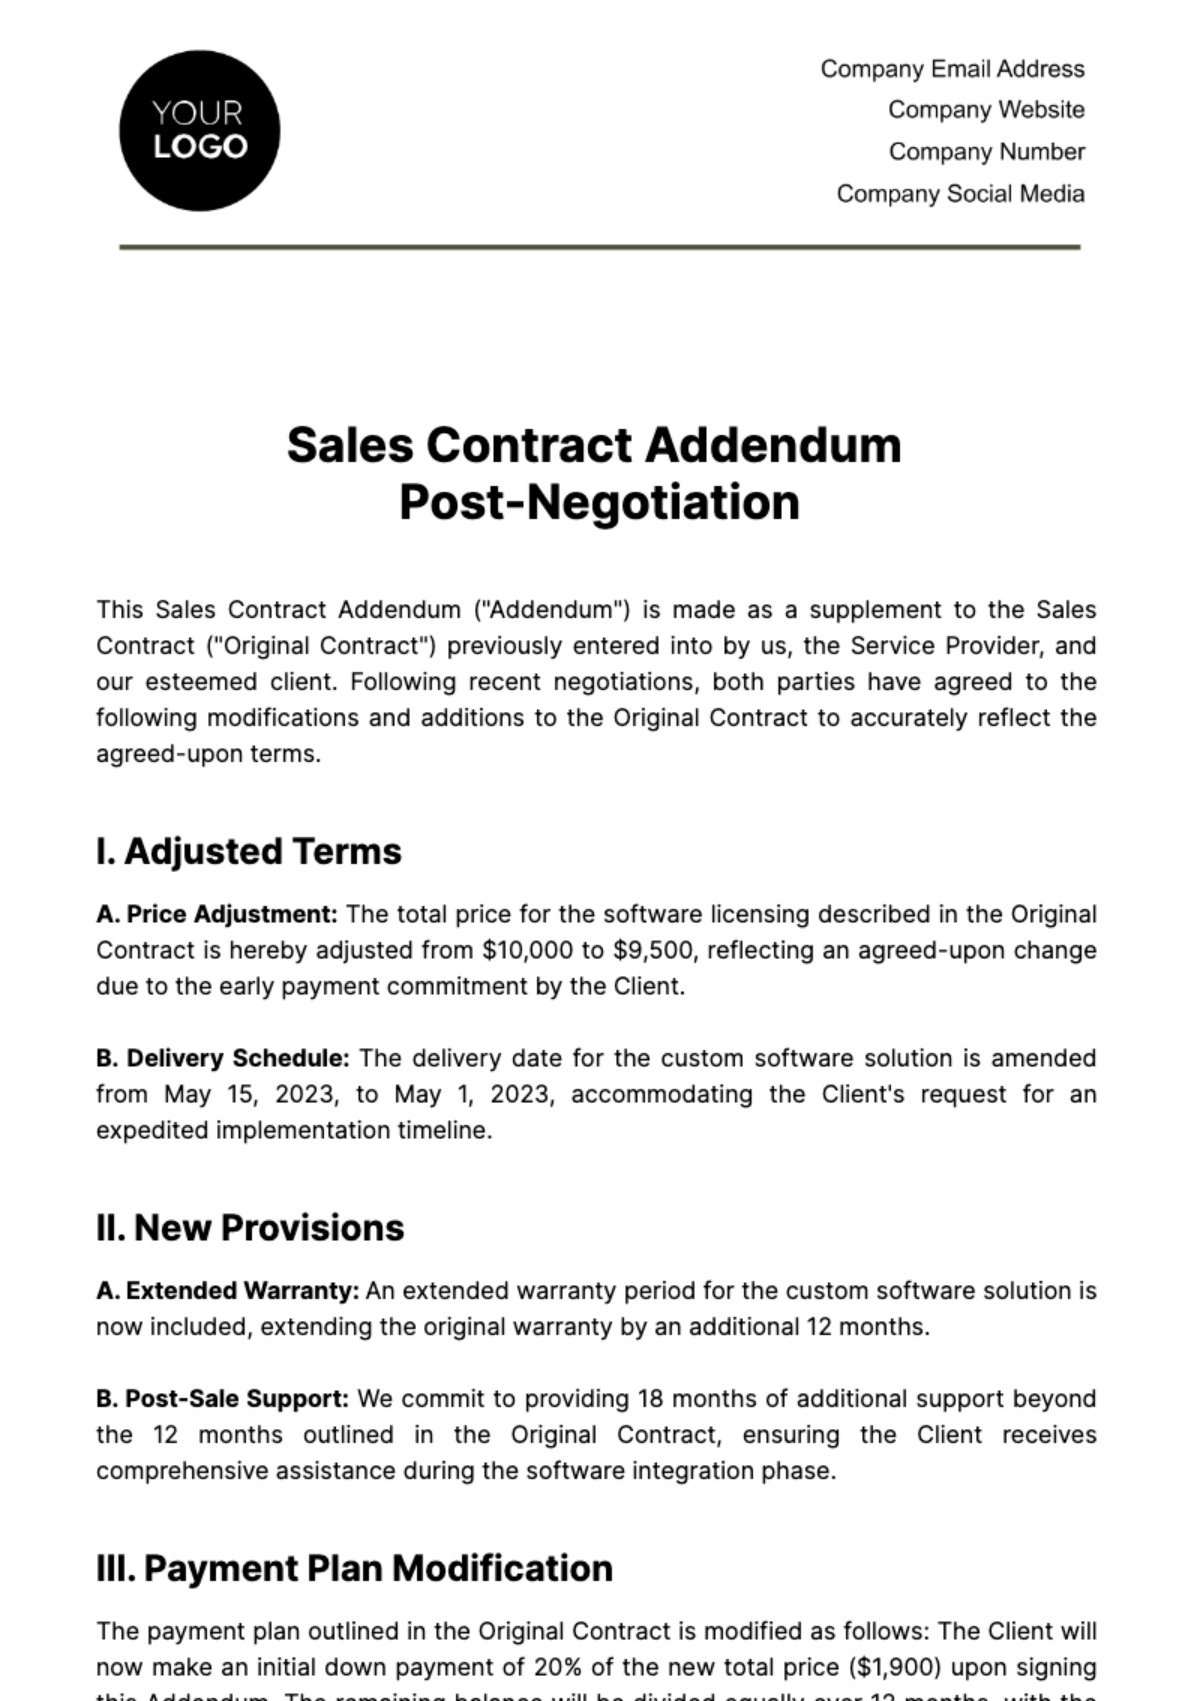 Sales Contract Addendum Post-Negotiation Template